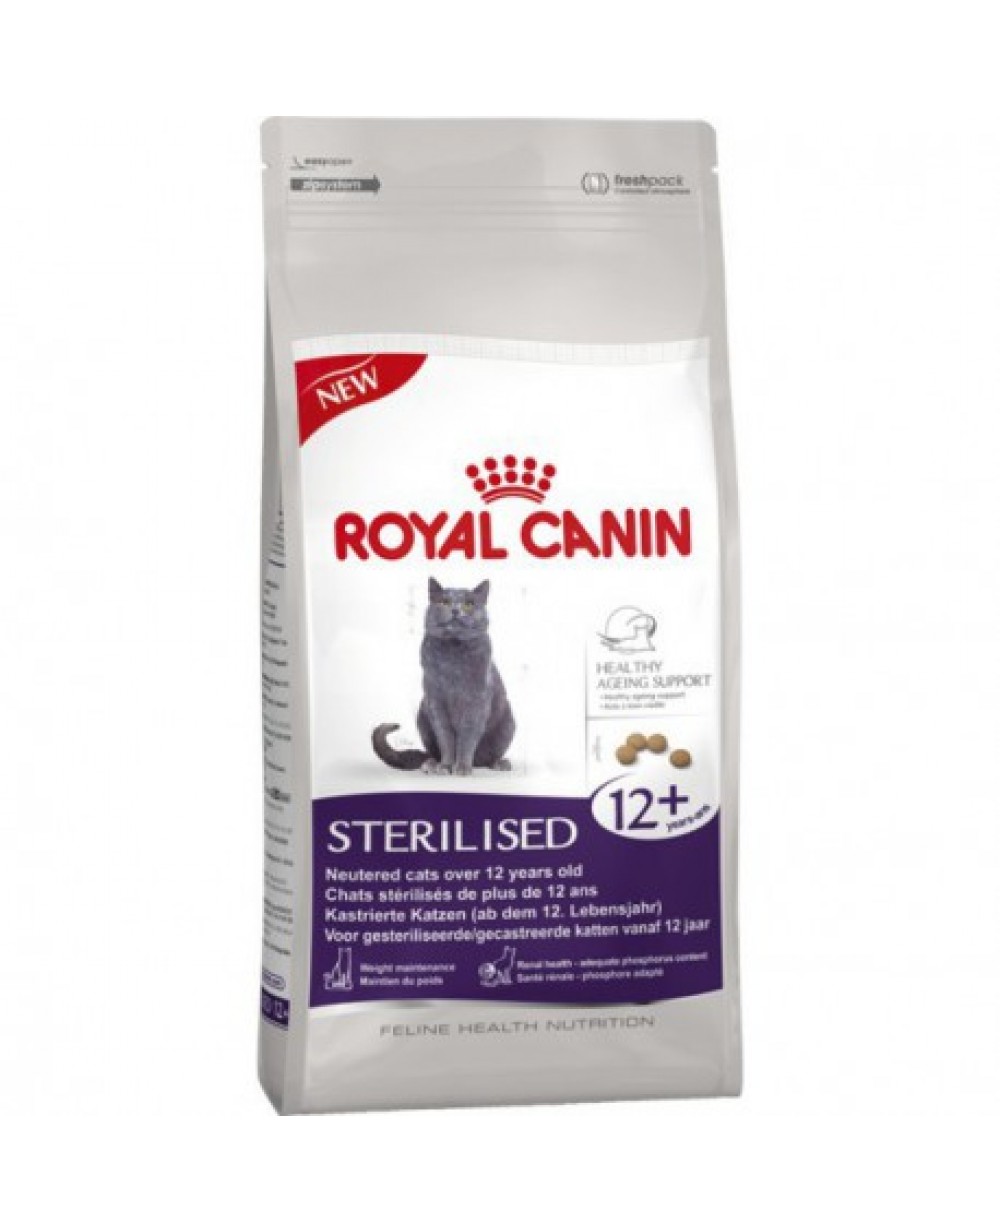 Royal canin sterilized. Роял Канин 12+ для стерилизованных кошек. Корм Роял Канин для кошек 12+. Роял конрн 12 + для стерил. Сухой корм для кошек Роял Канин Стерилайзд.